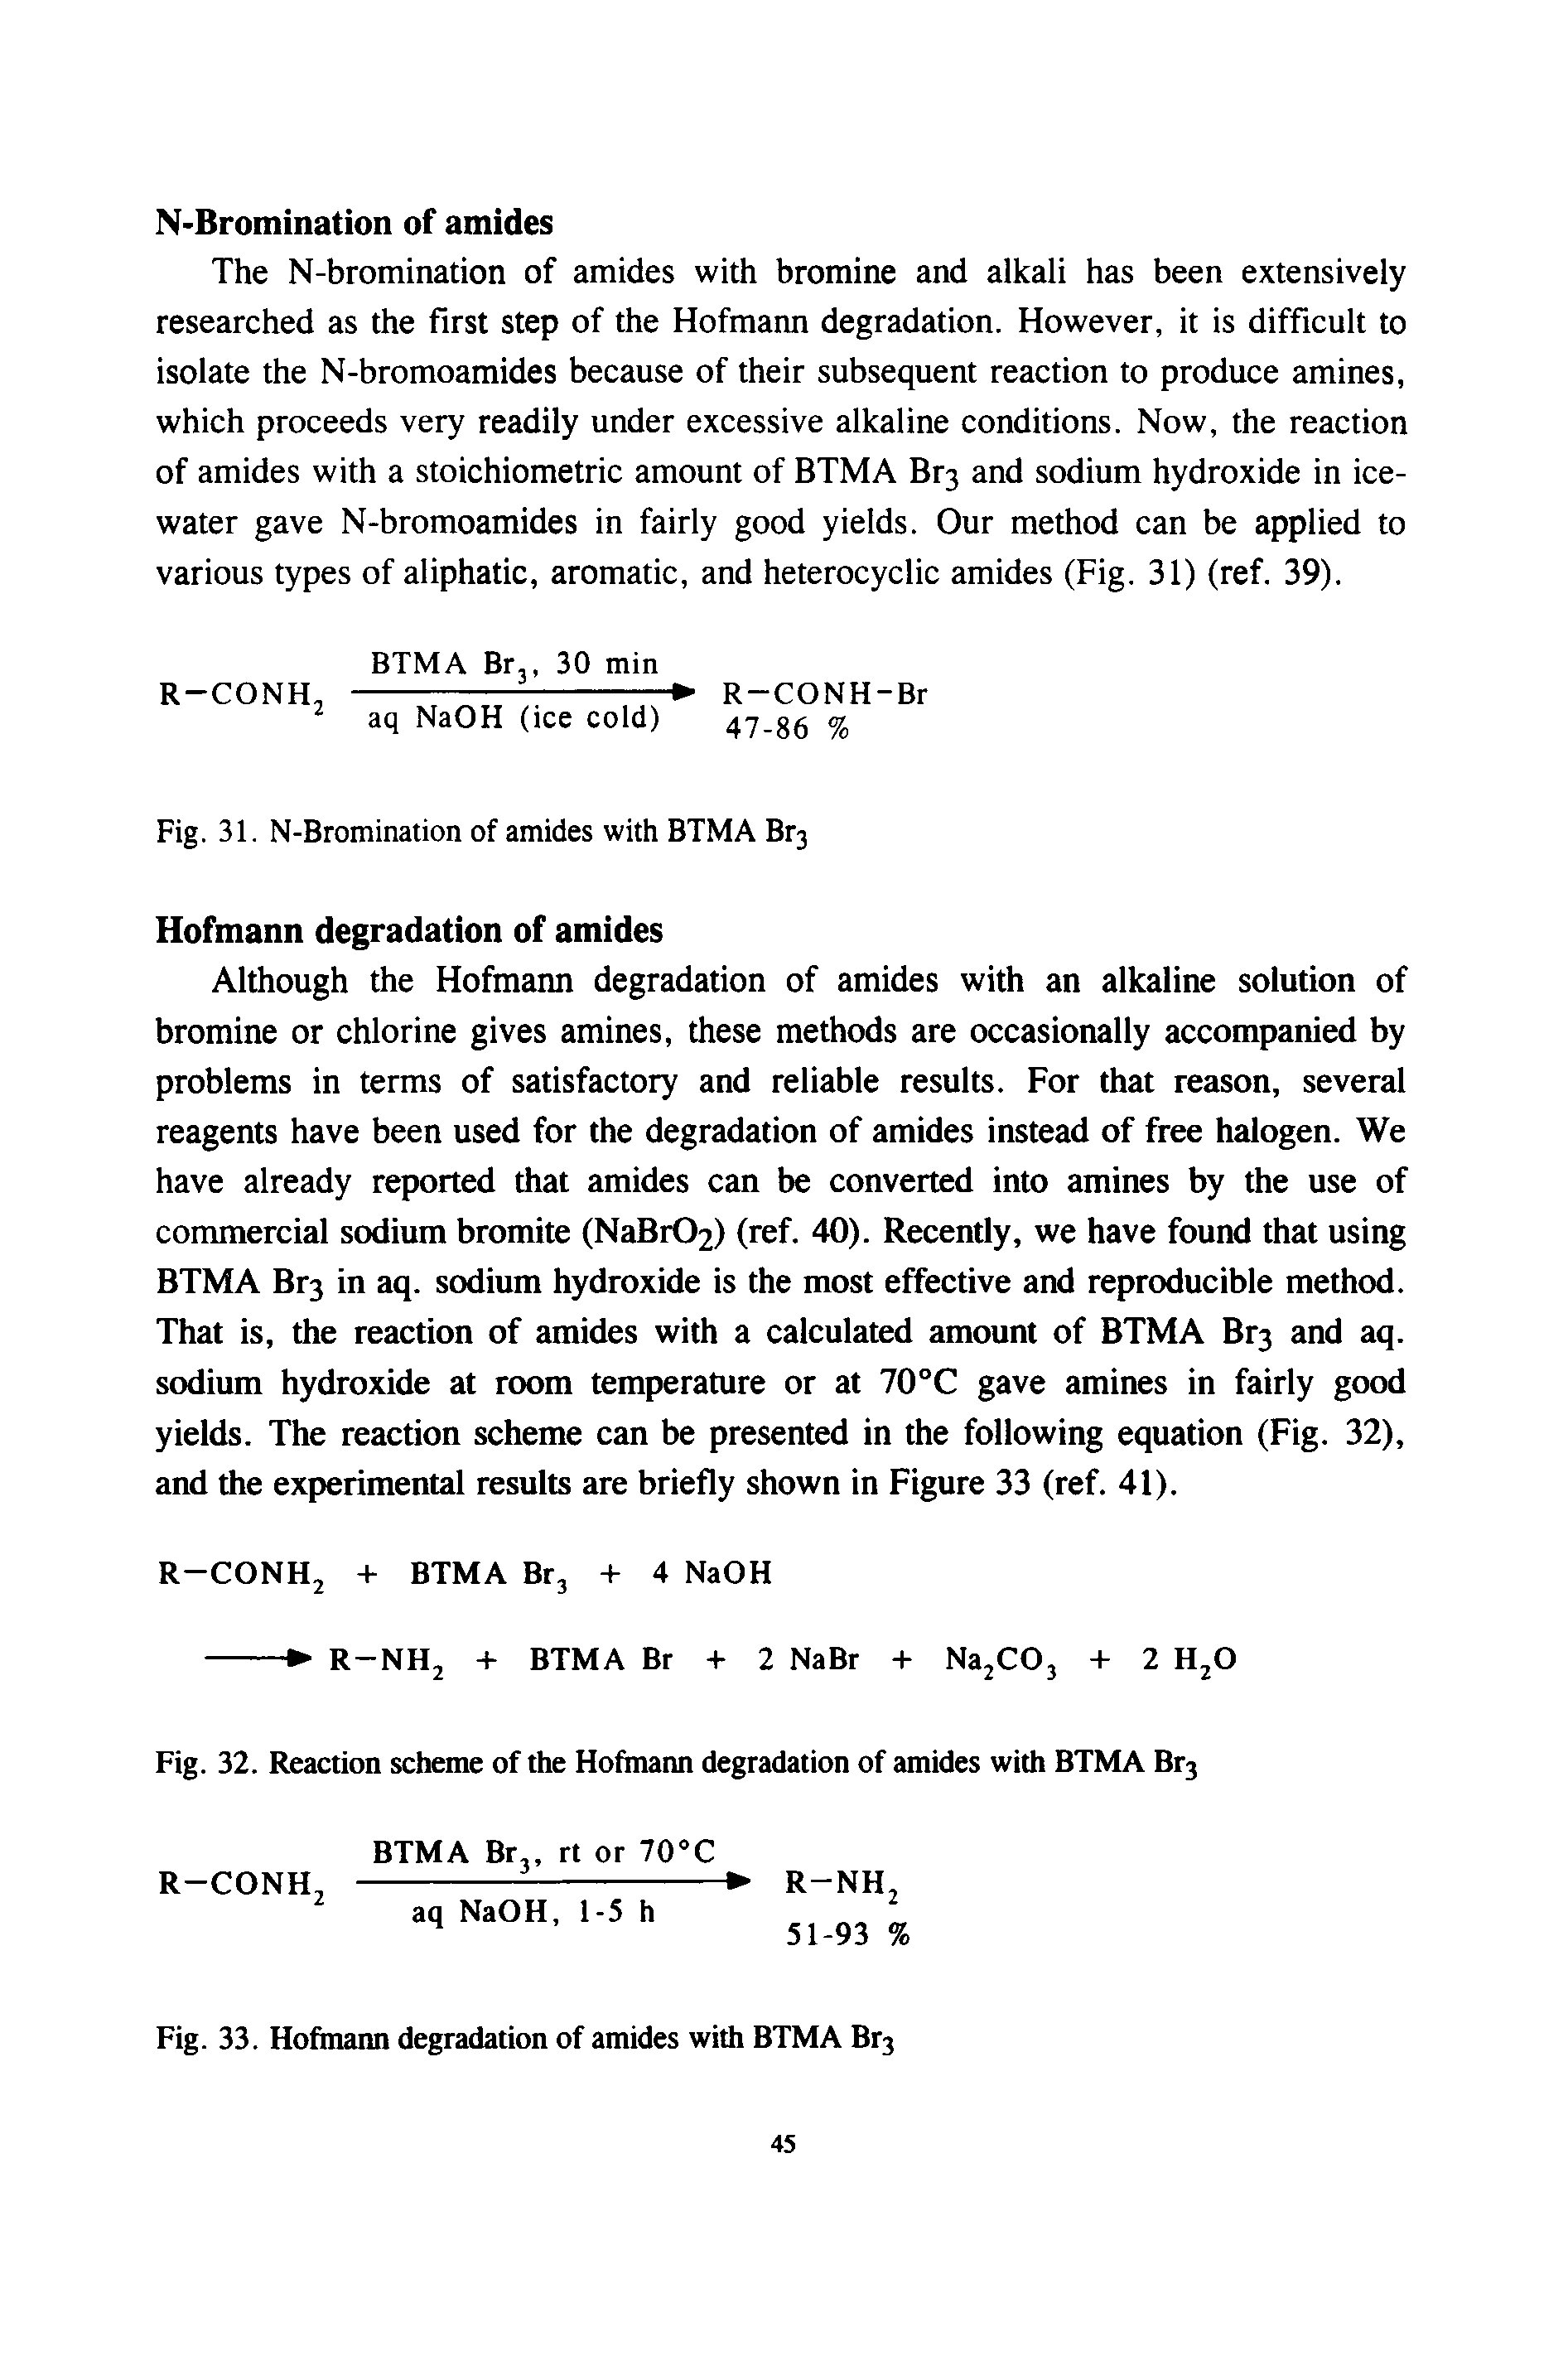 Fig. 32. Reaction scheme of the Hofmann degradation of amides with BTMA Br3 BTMA Bfj, rt or 70 C...